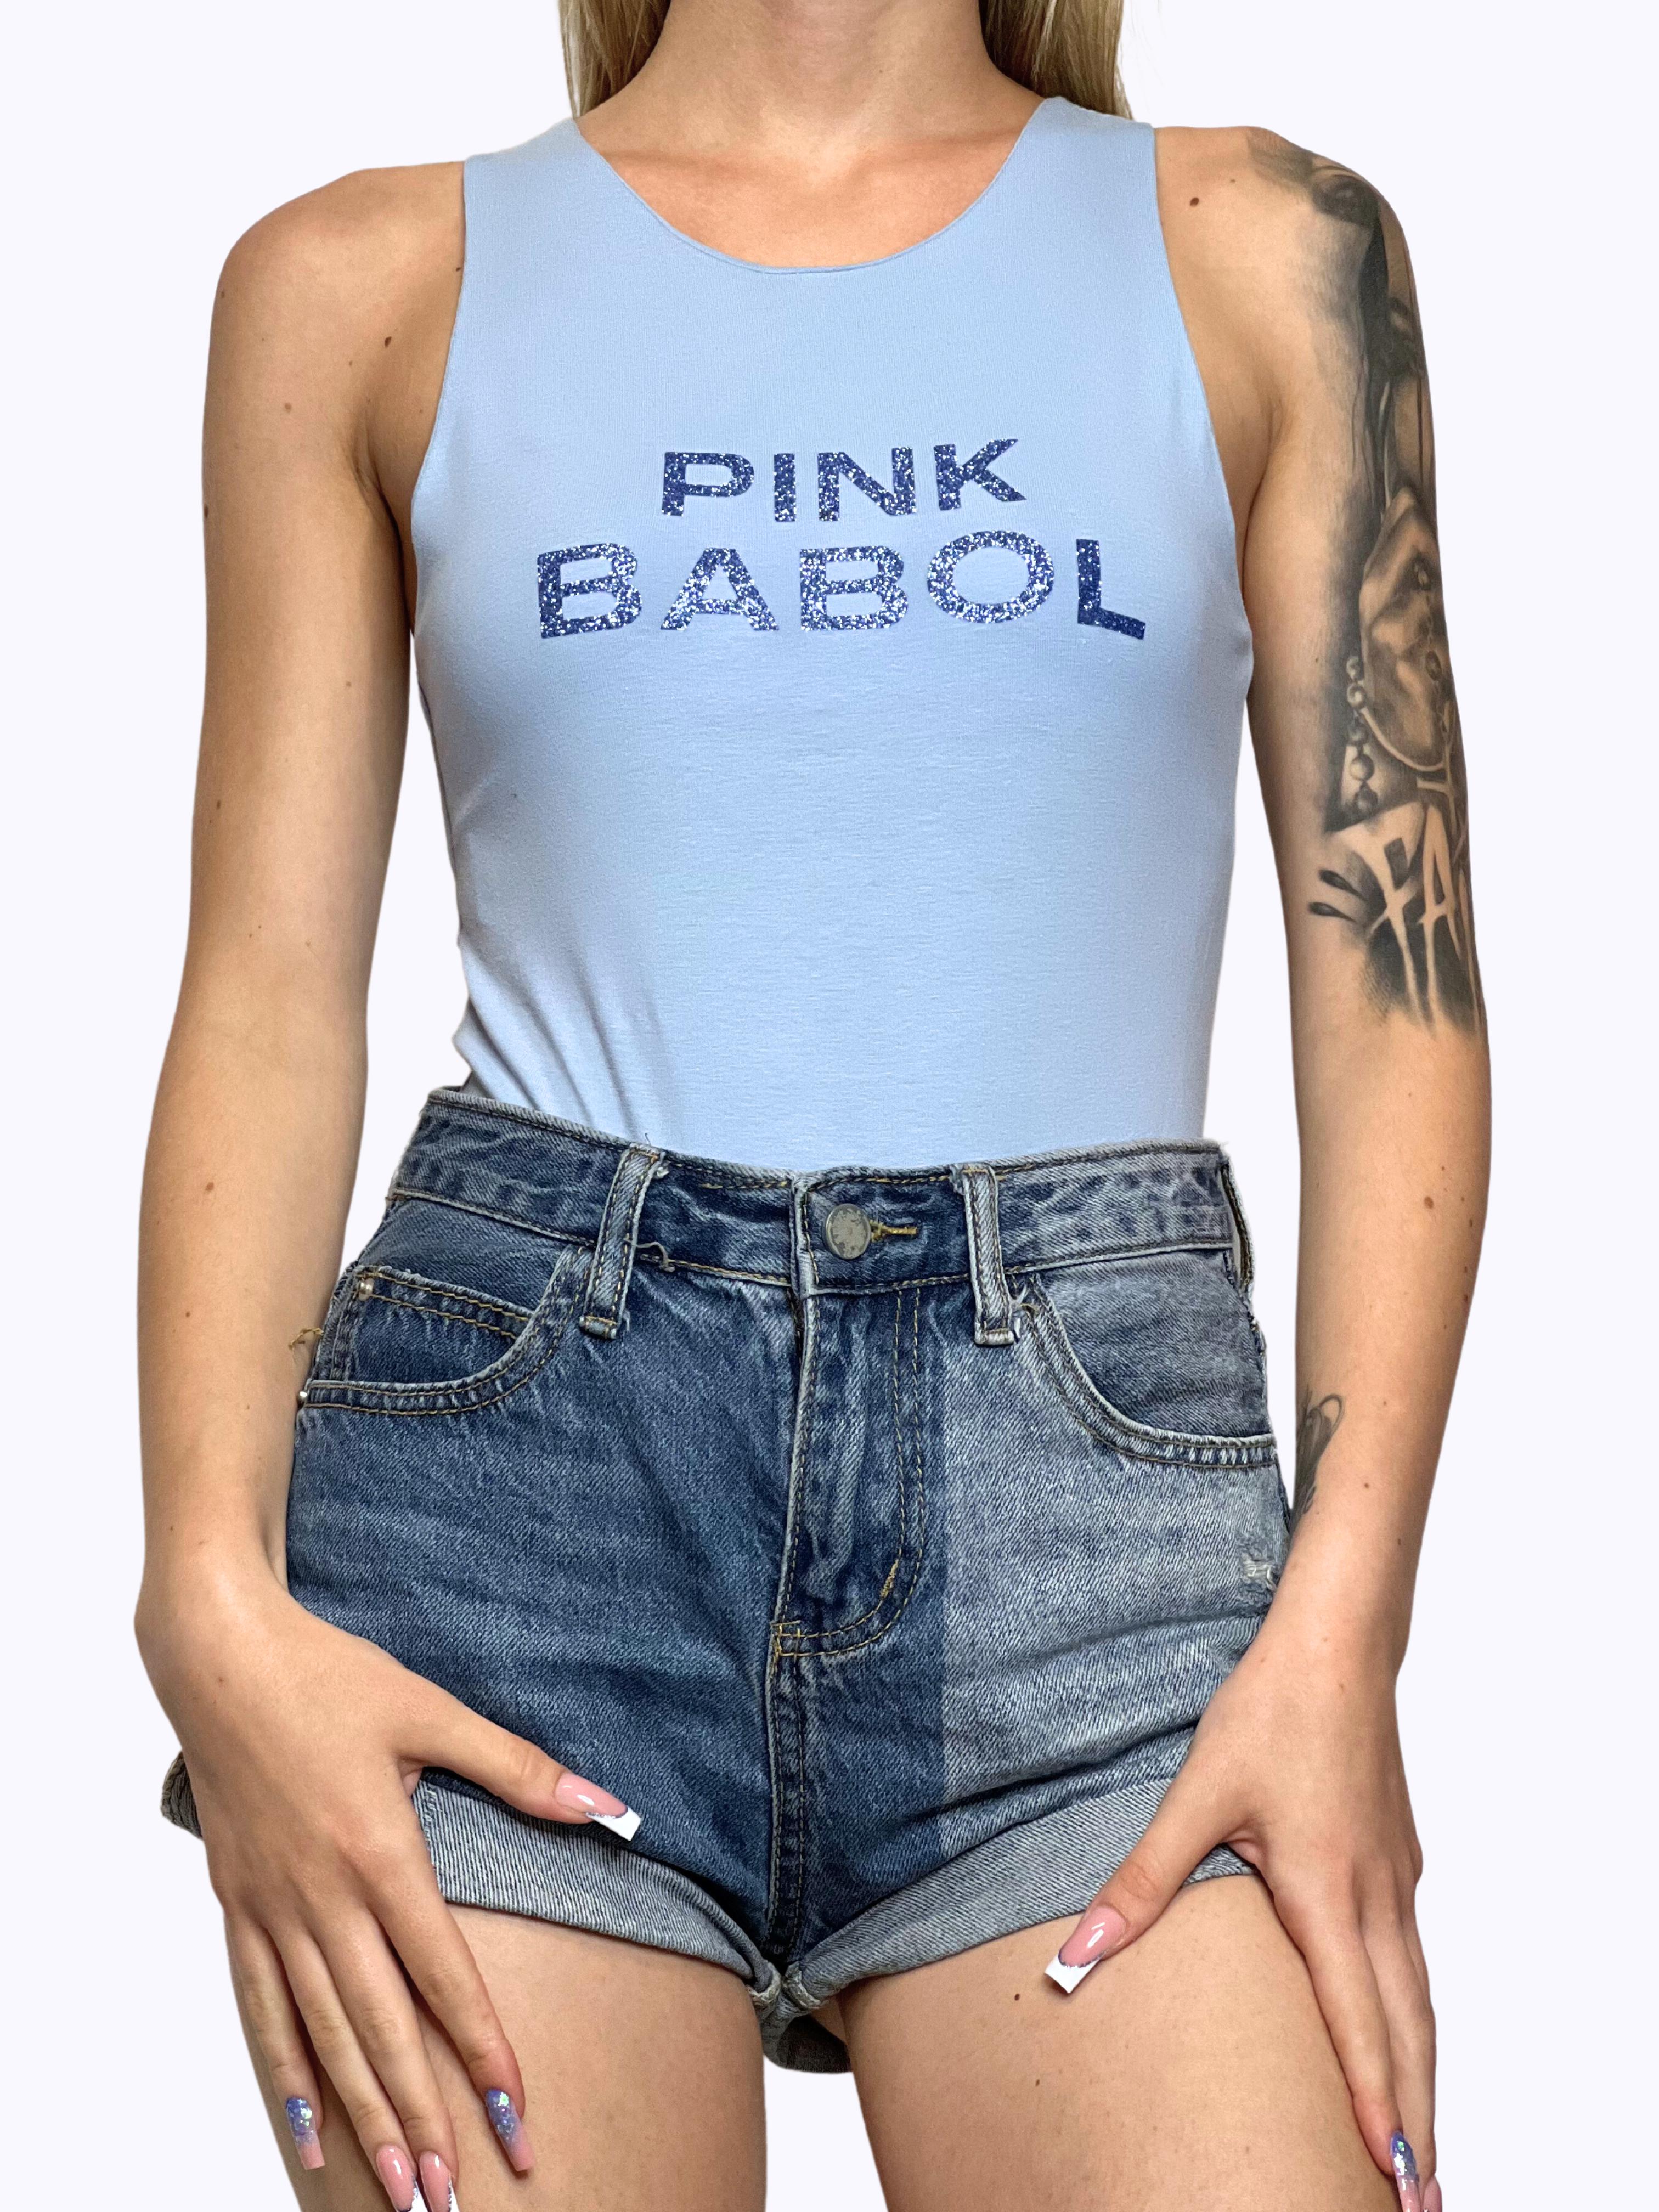 Body elasticizzato Pink Babol Glitter-Pink Babol